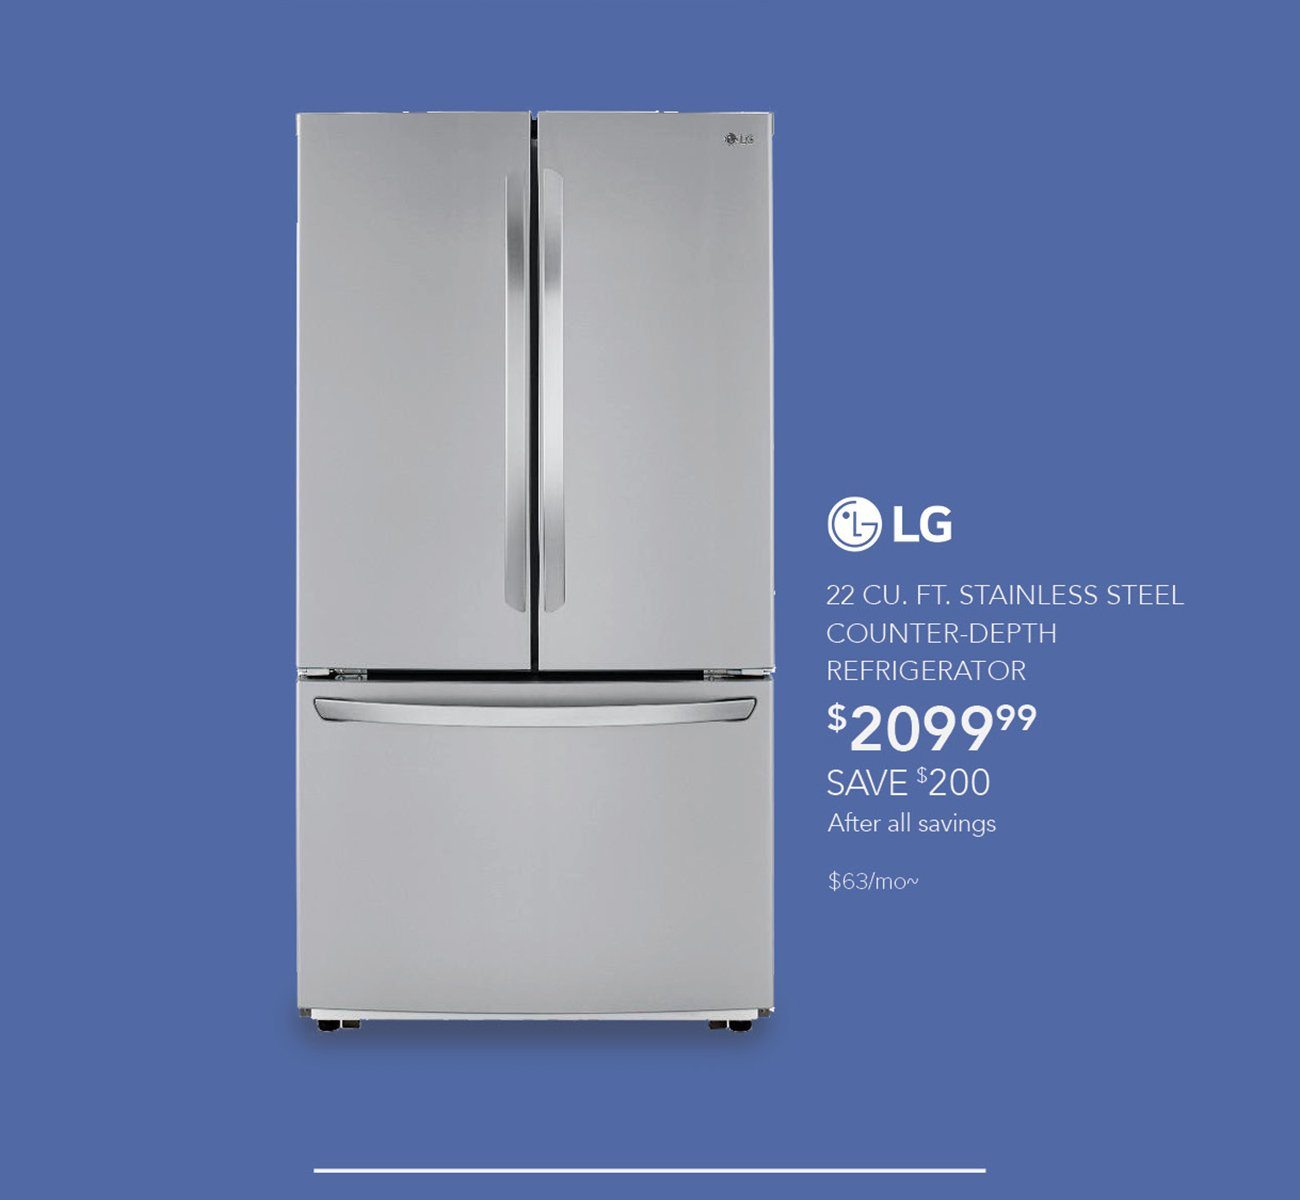 LG-counter-depth-refrigerator